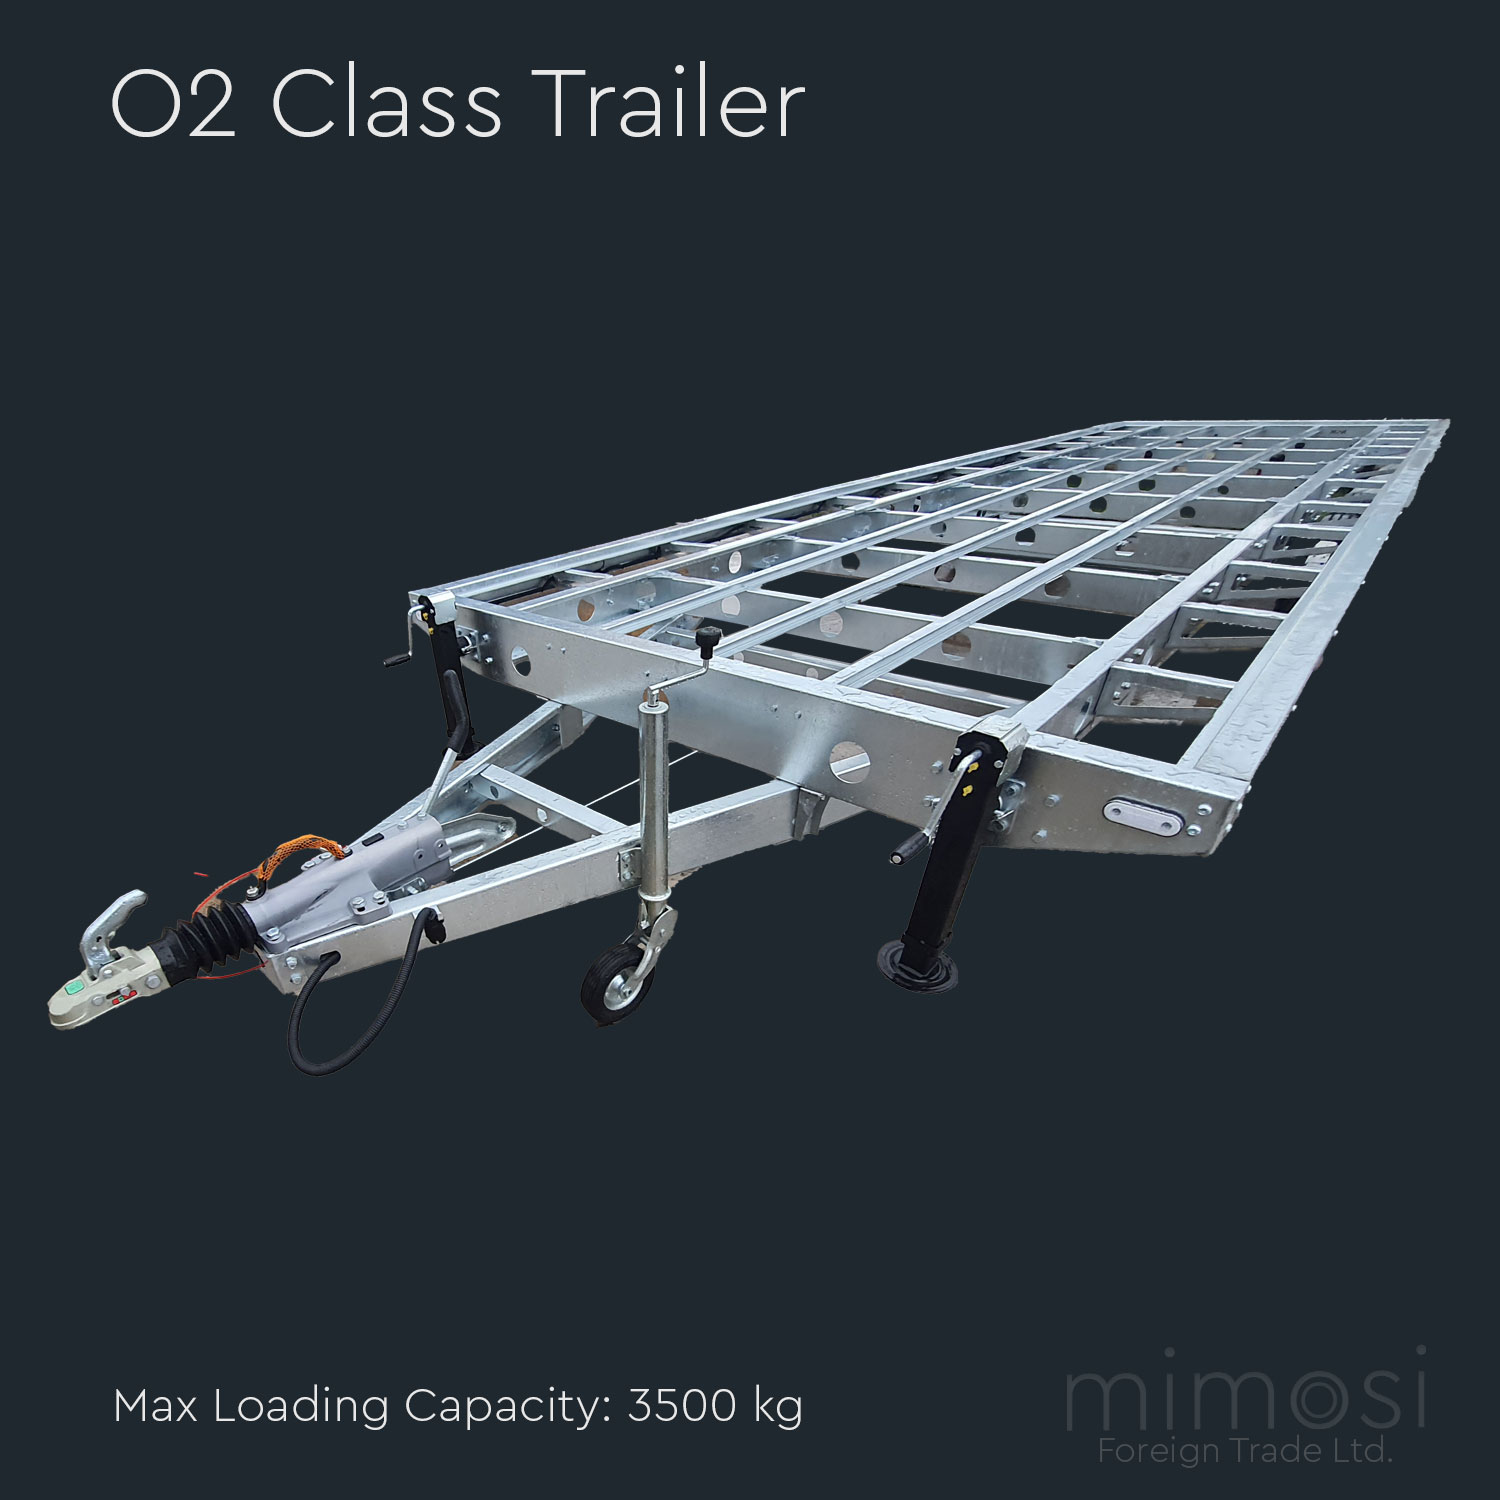 Trailer O2 Class